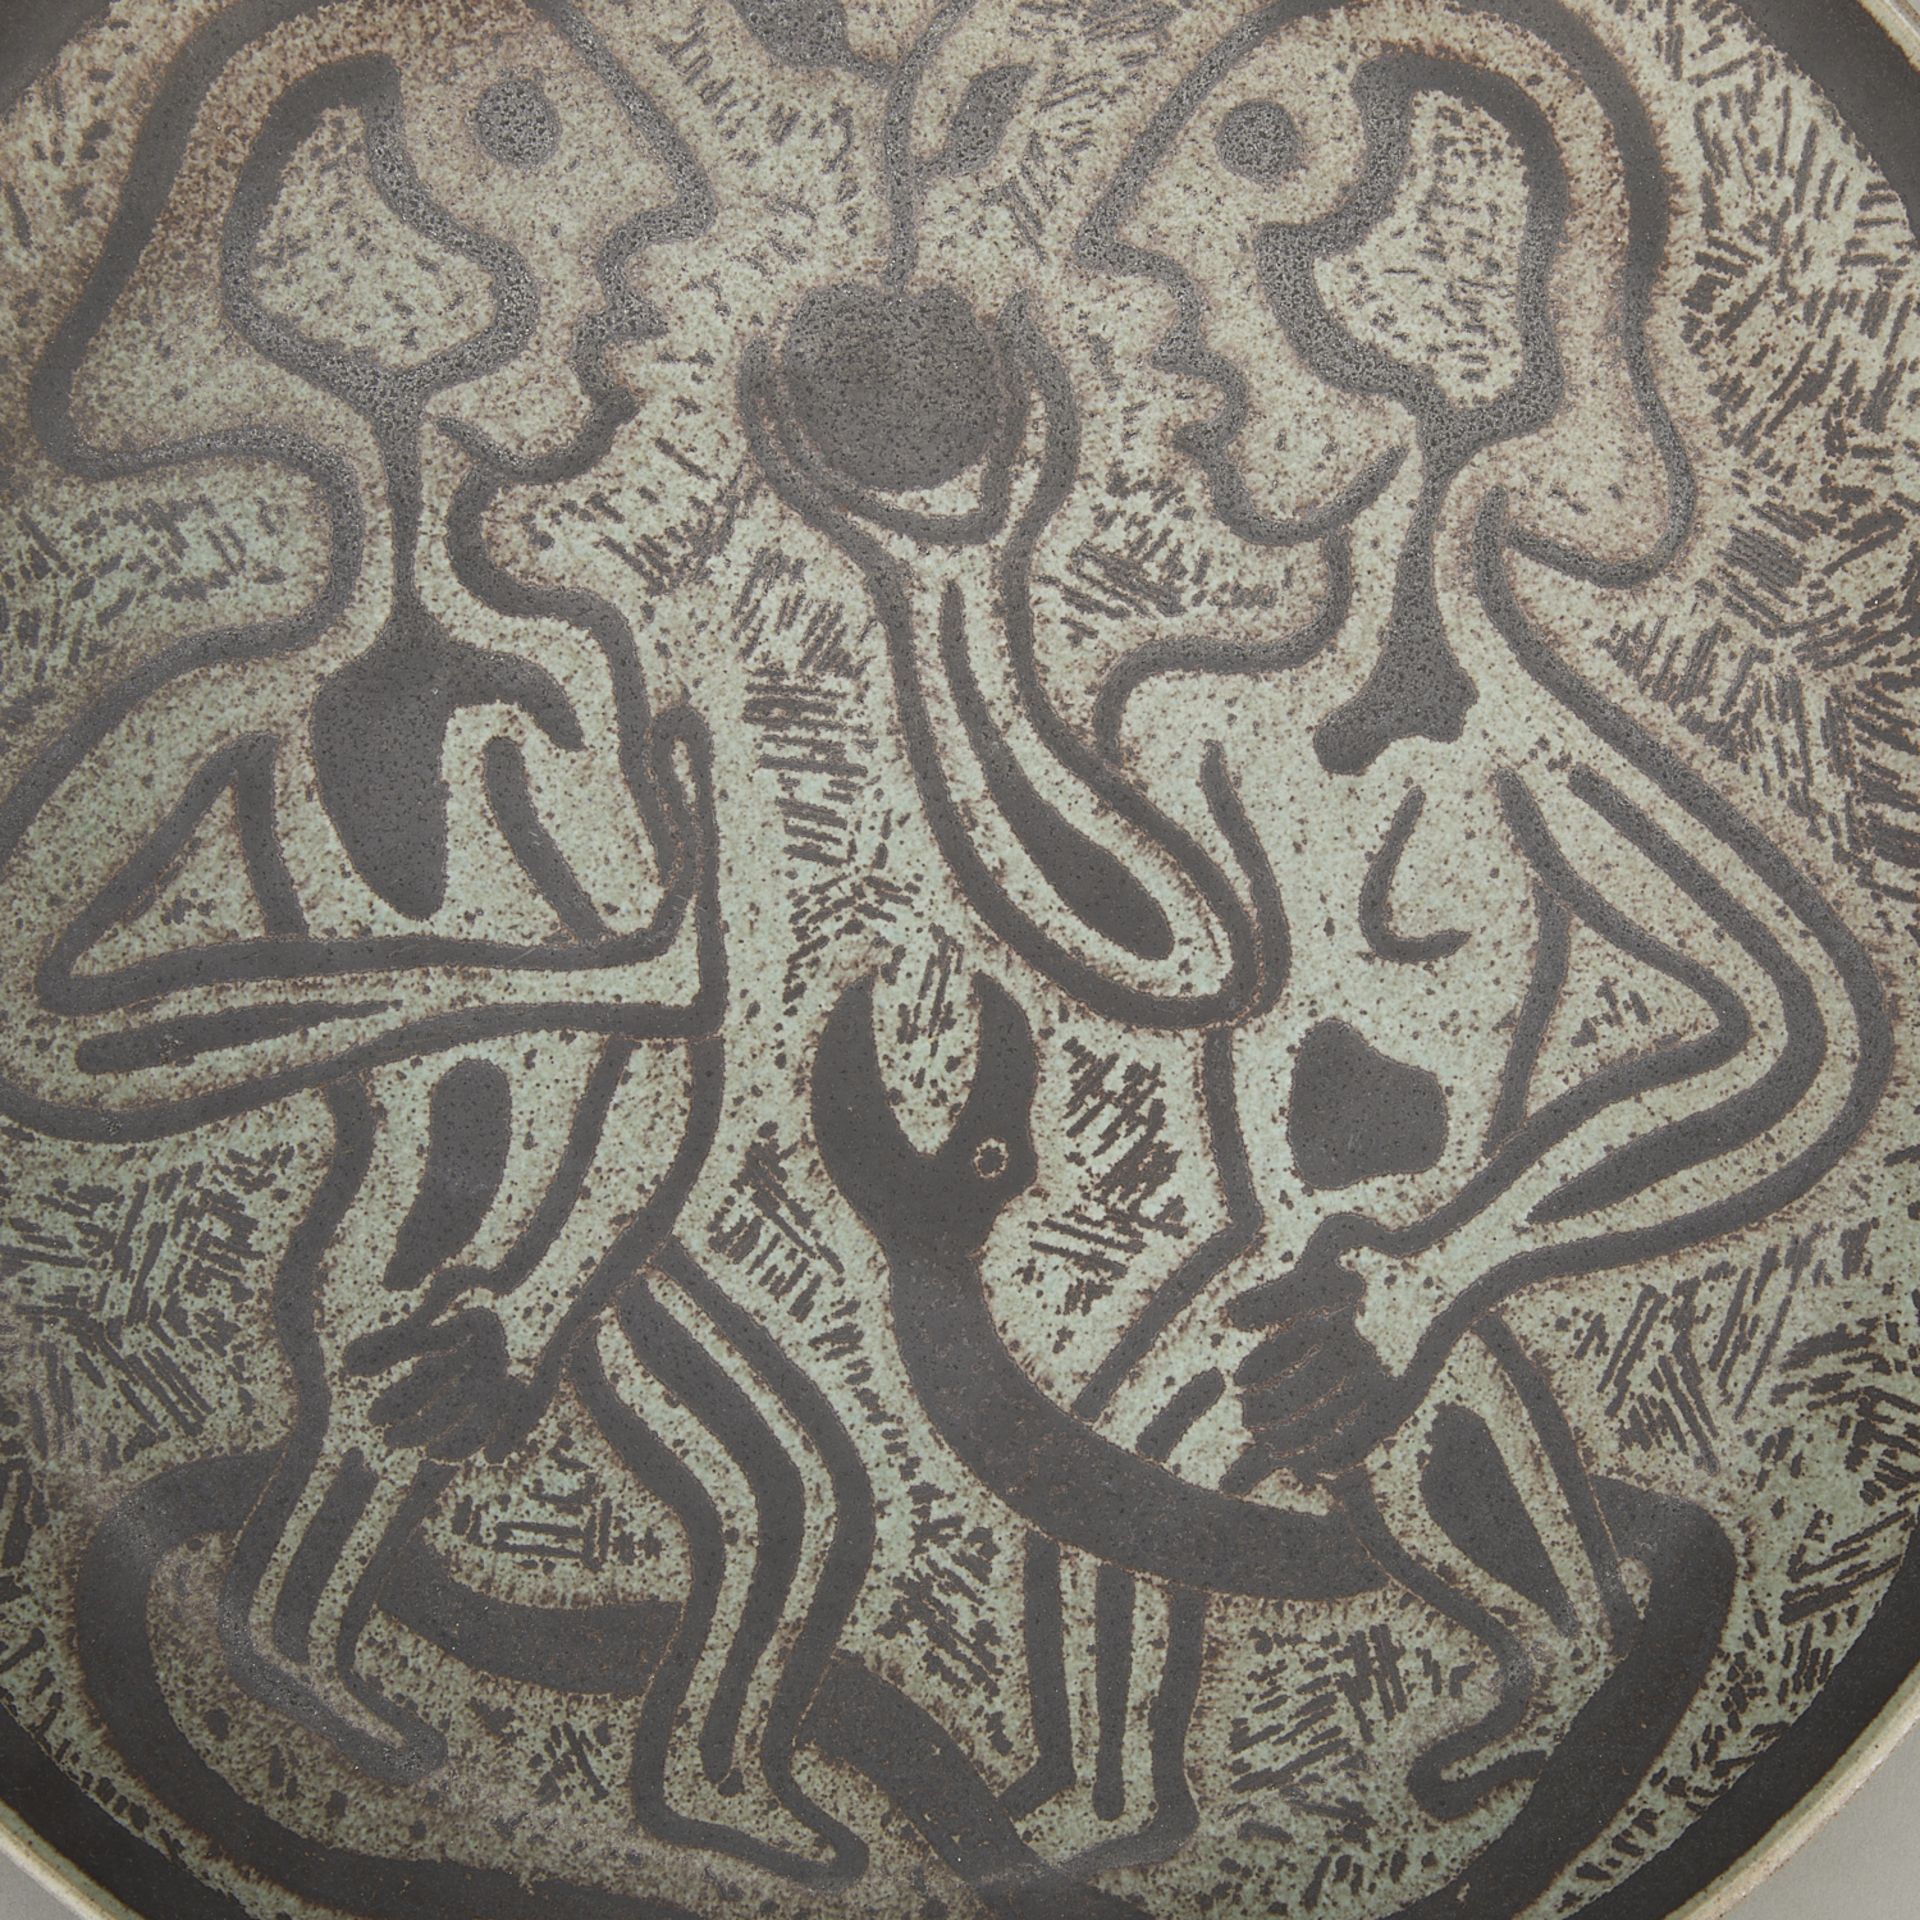 Edwin Scheier Ceramic Plate Adam & Eve 1947 - Image 4 of 9